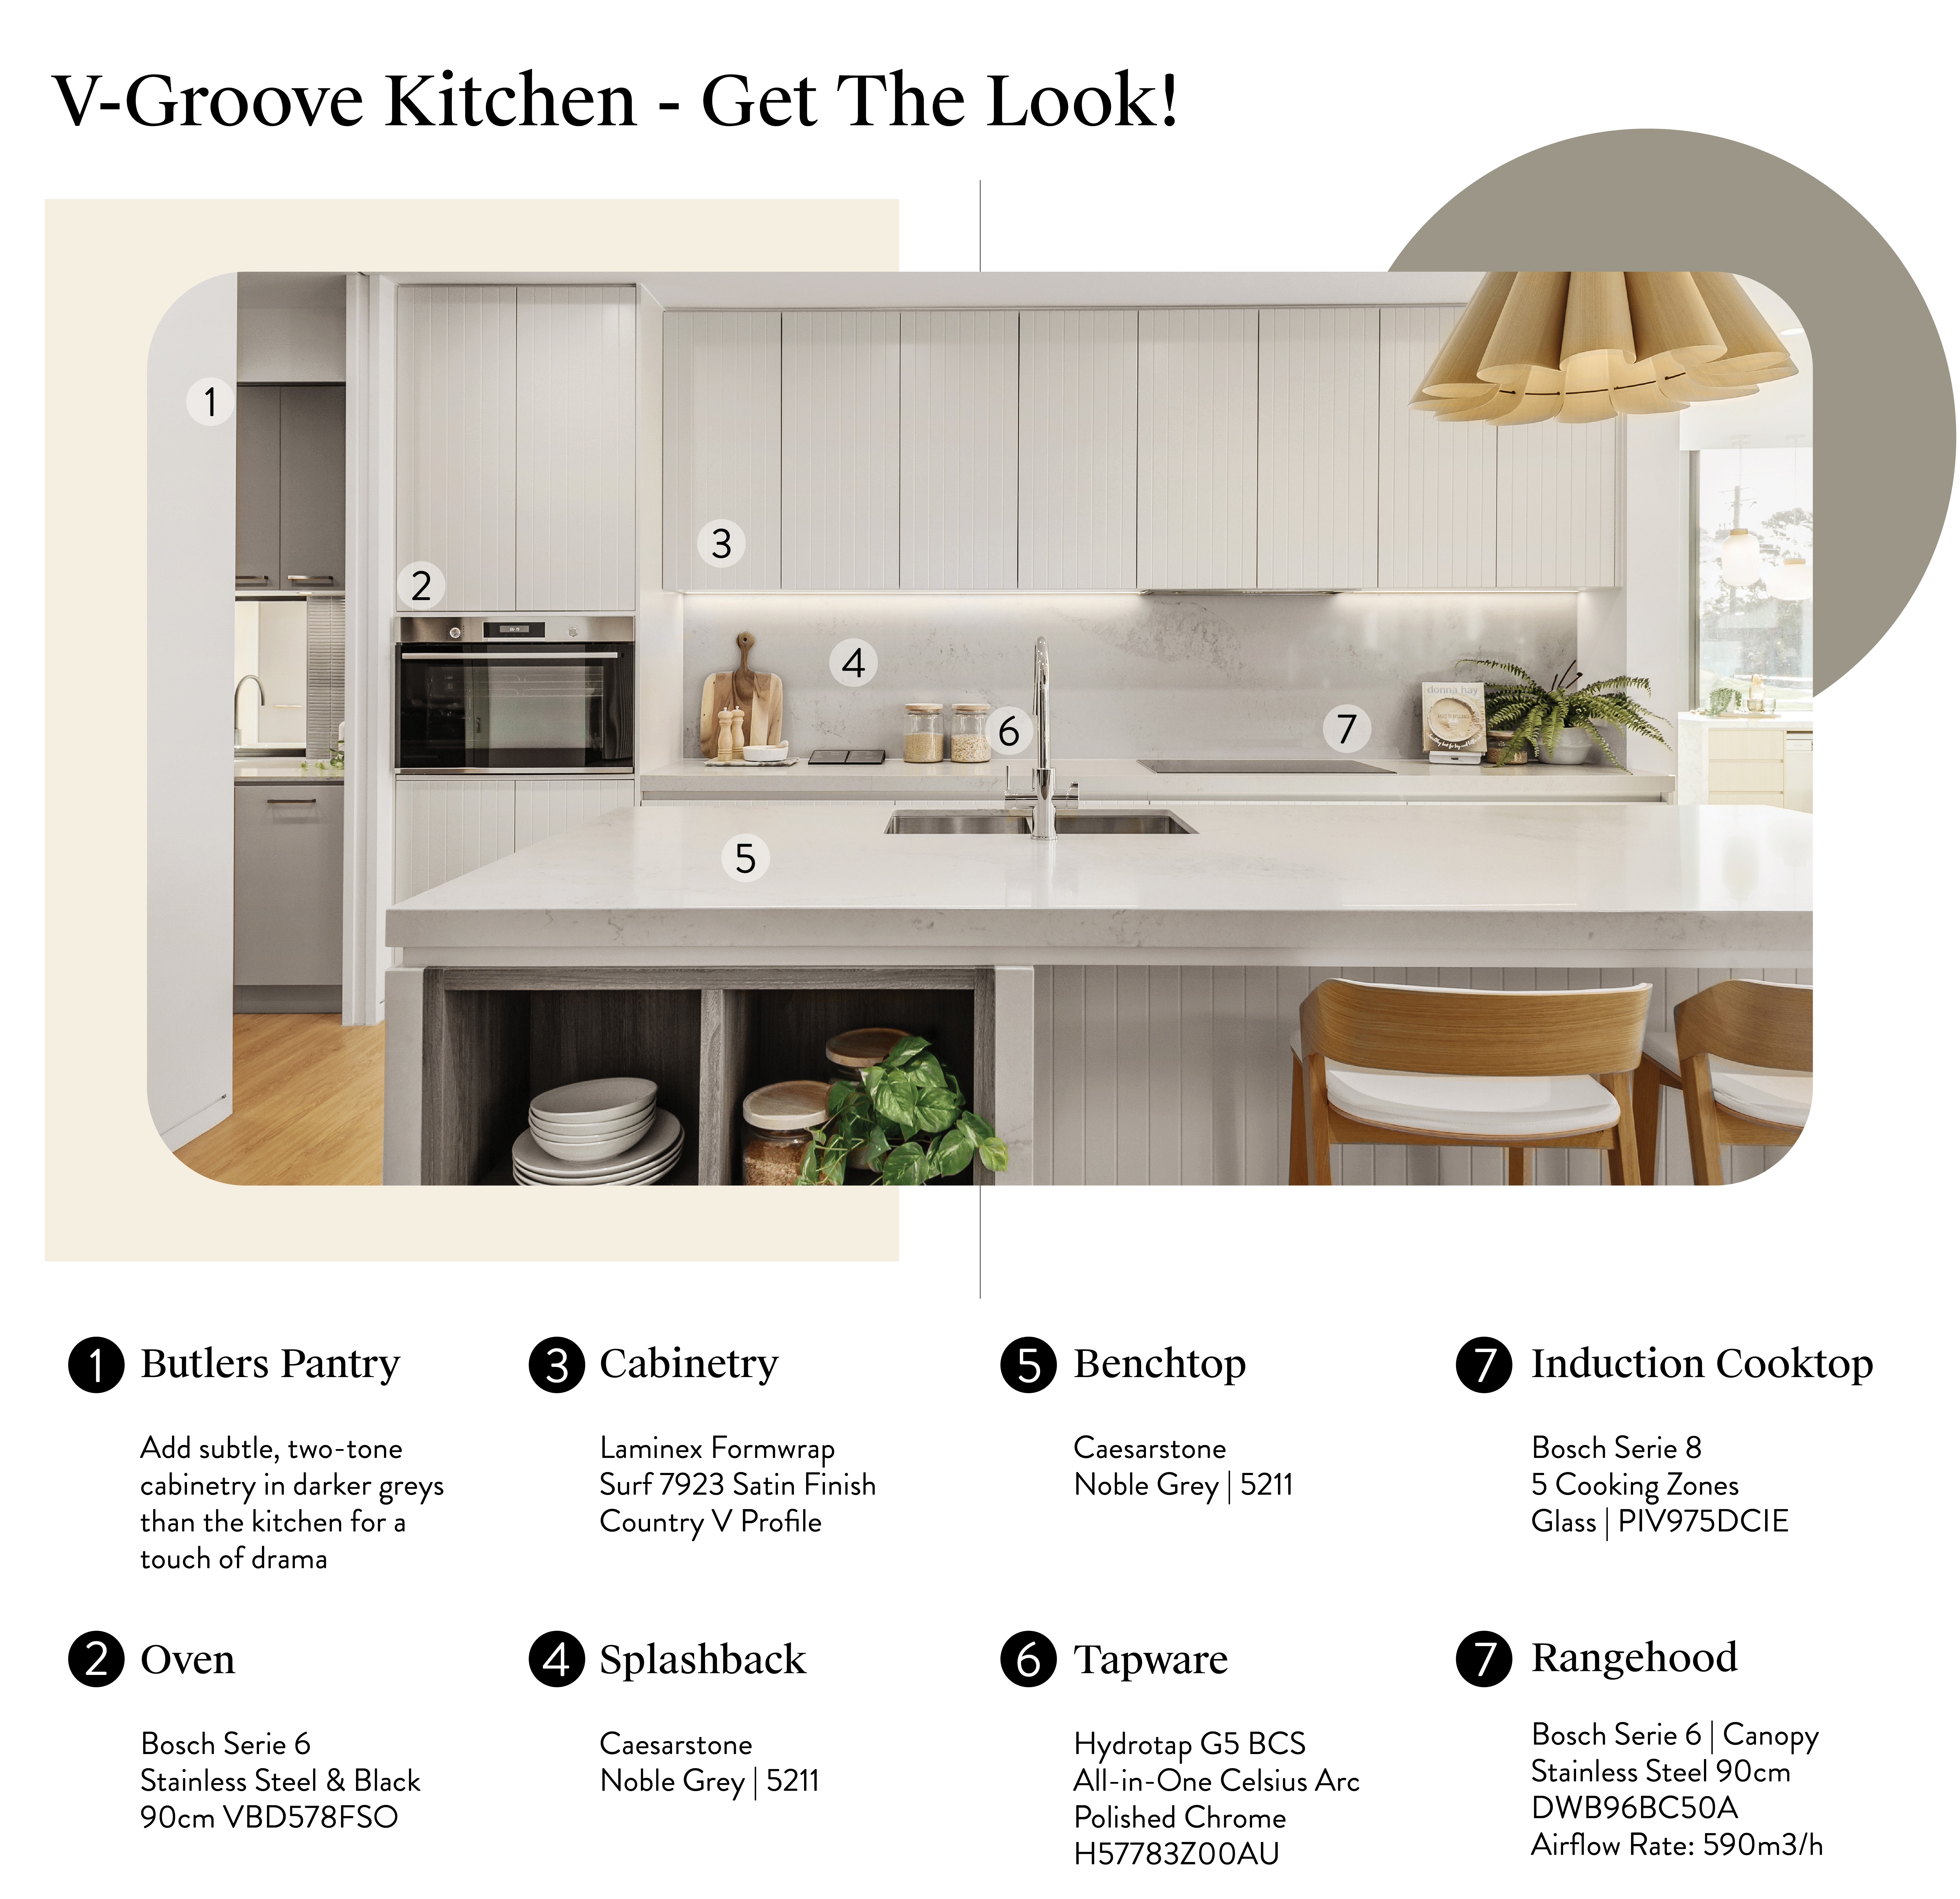 Get-the-Showroom-Look-V-Groove-Kitchen-carlisle-homes-body1.jpg